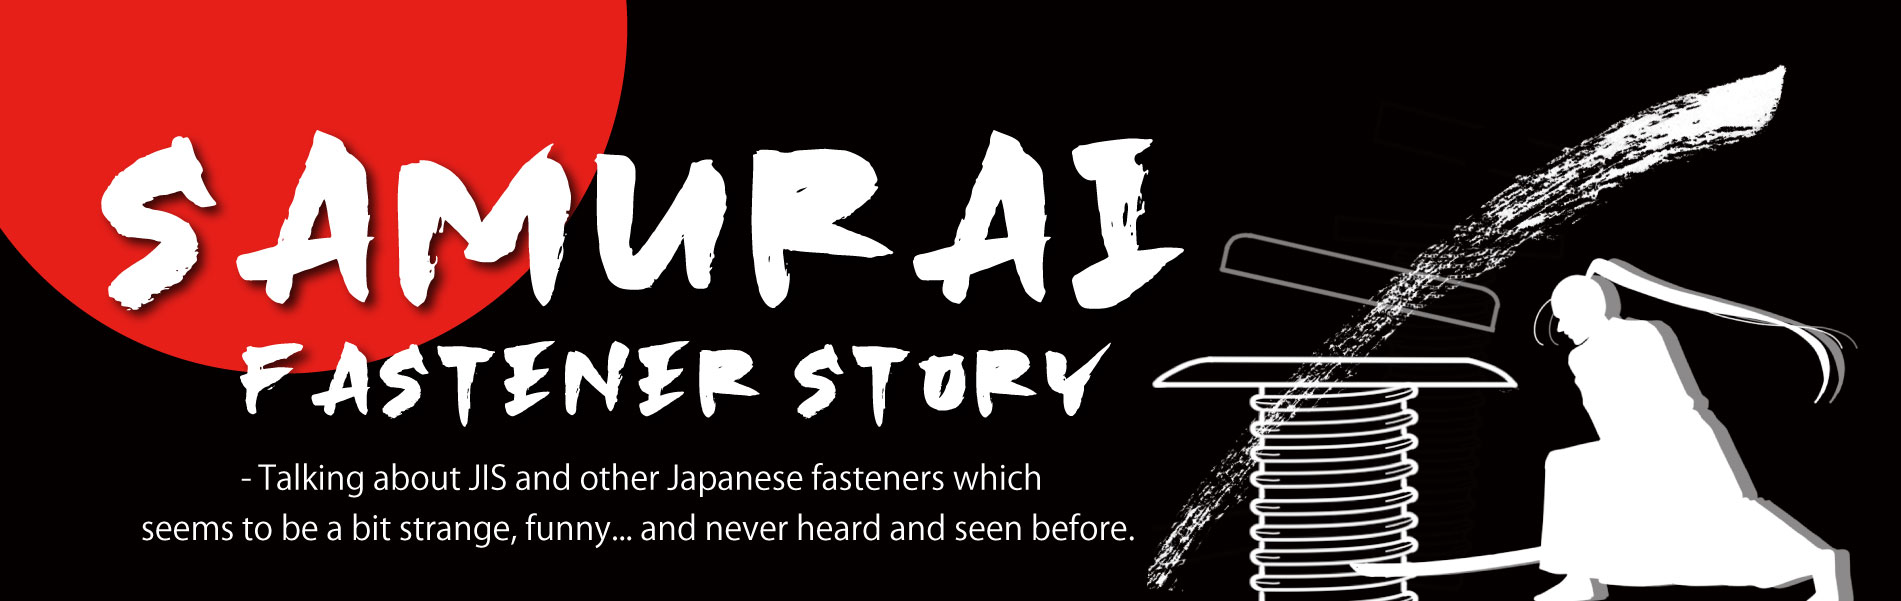 samurai fastener story